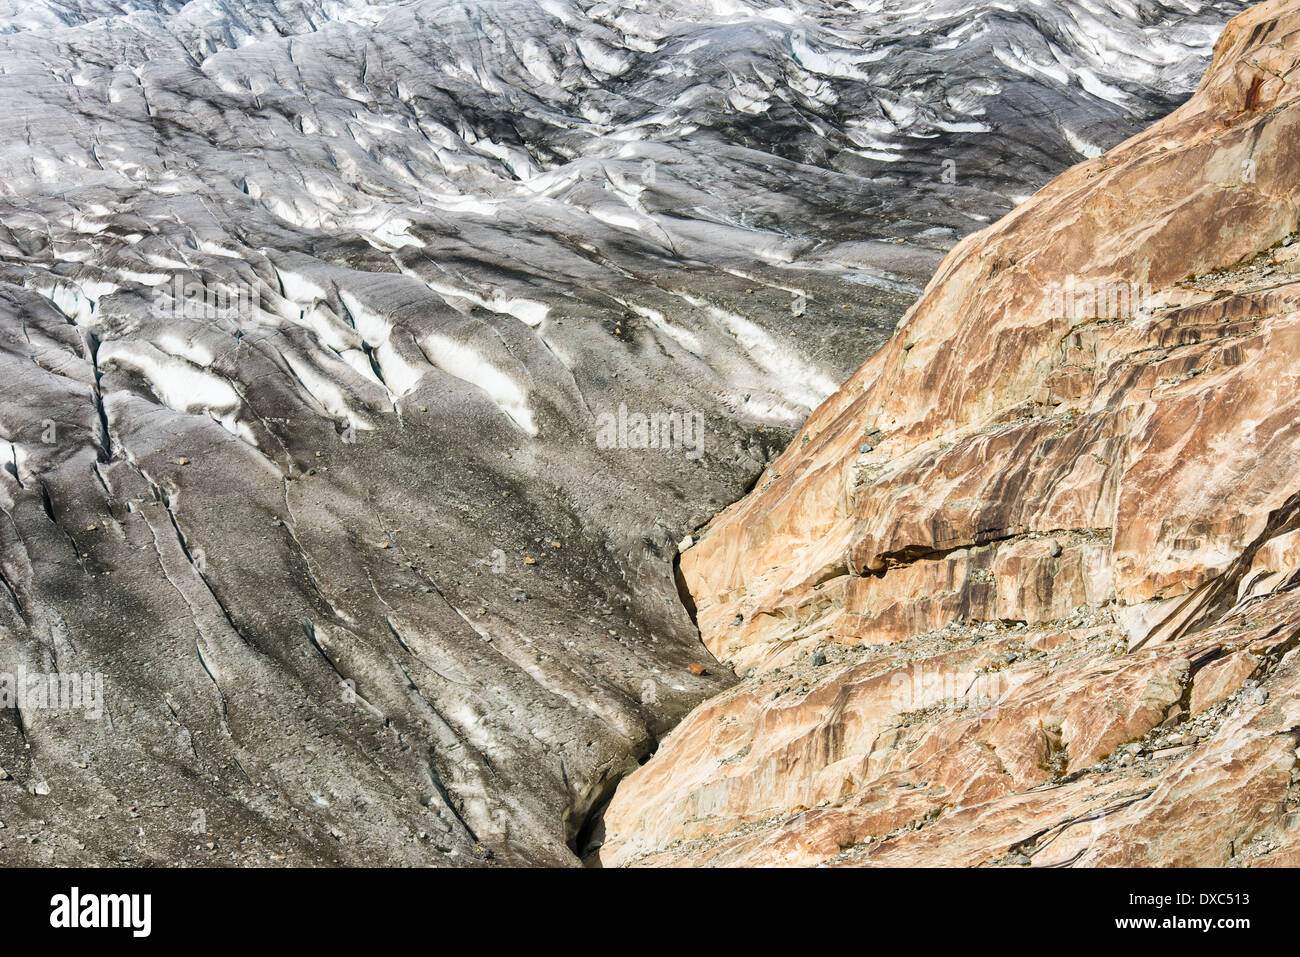 Ice and rocks, Aletsch Glacier, Valais, Swiss Alps, Switzerland, Europe Stock Photo